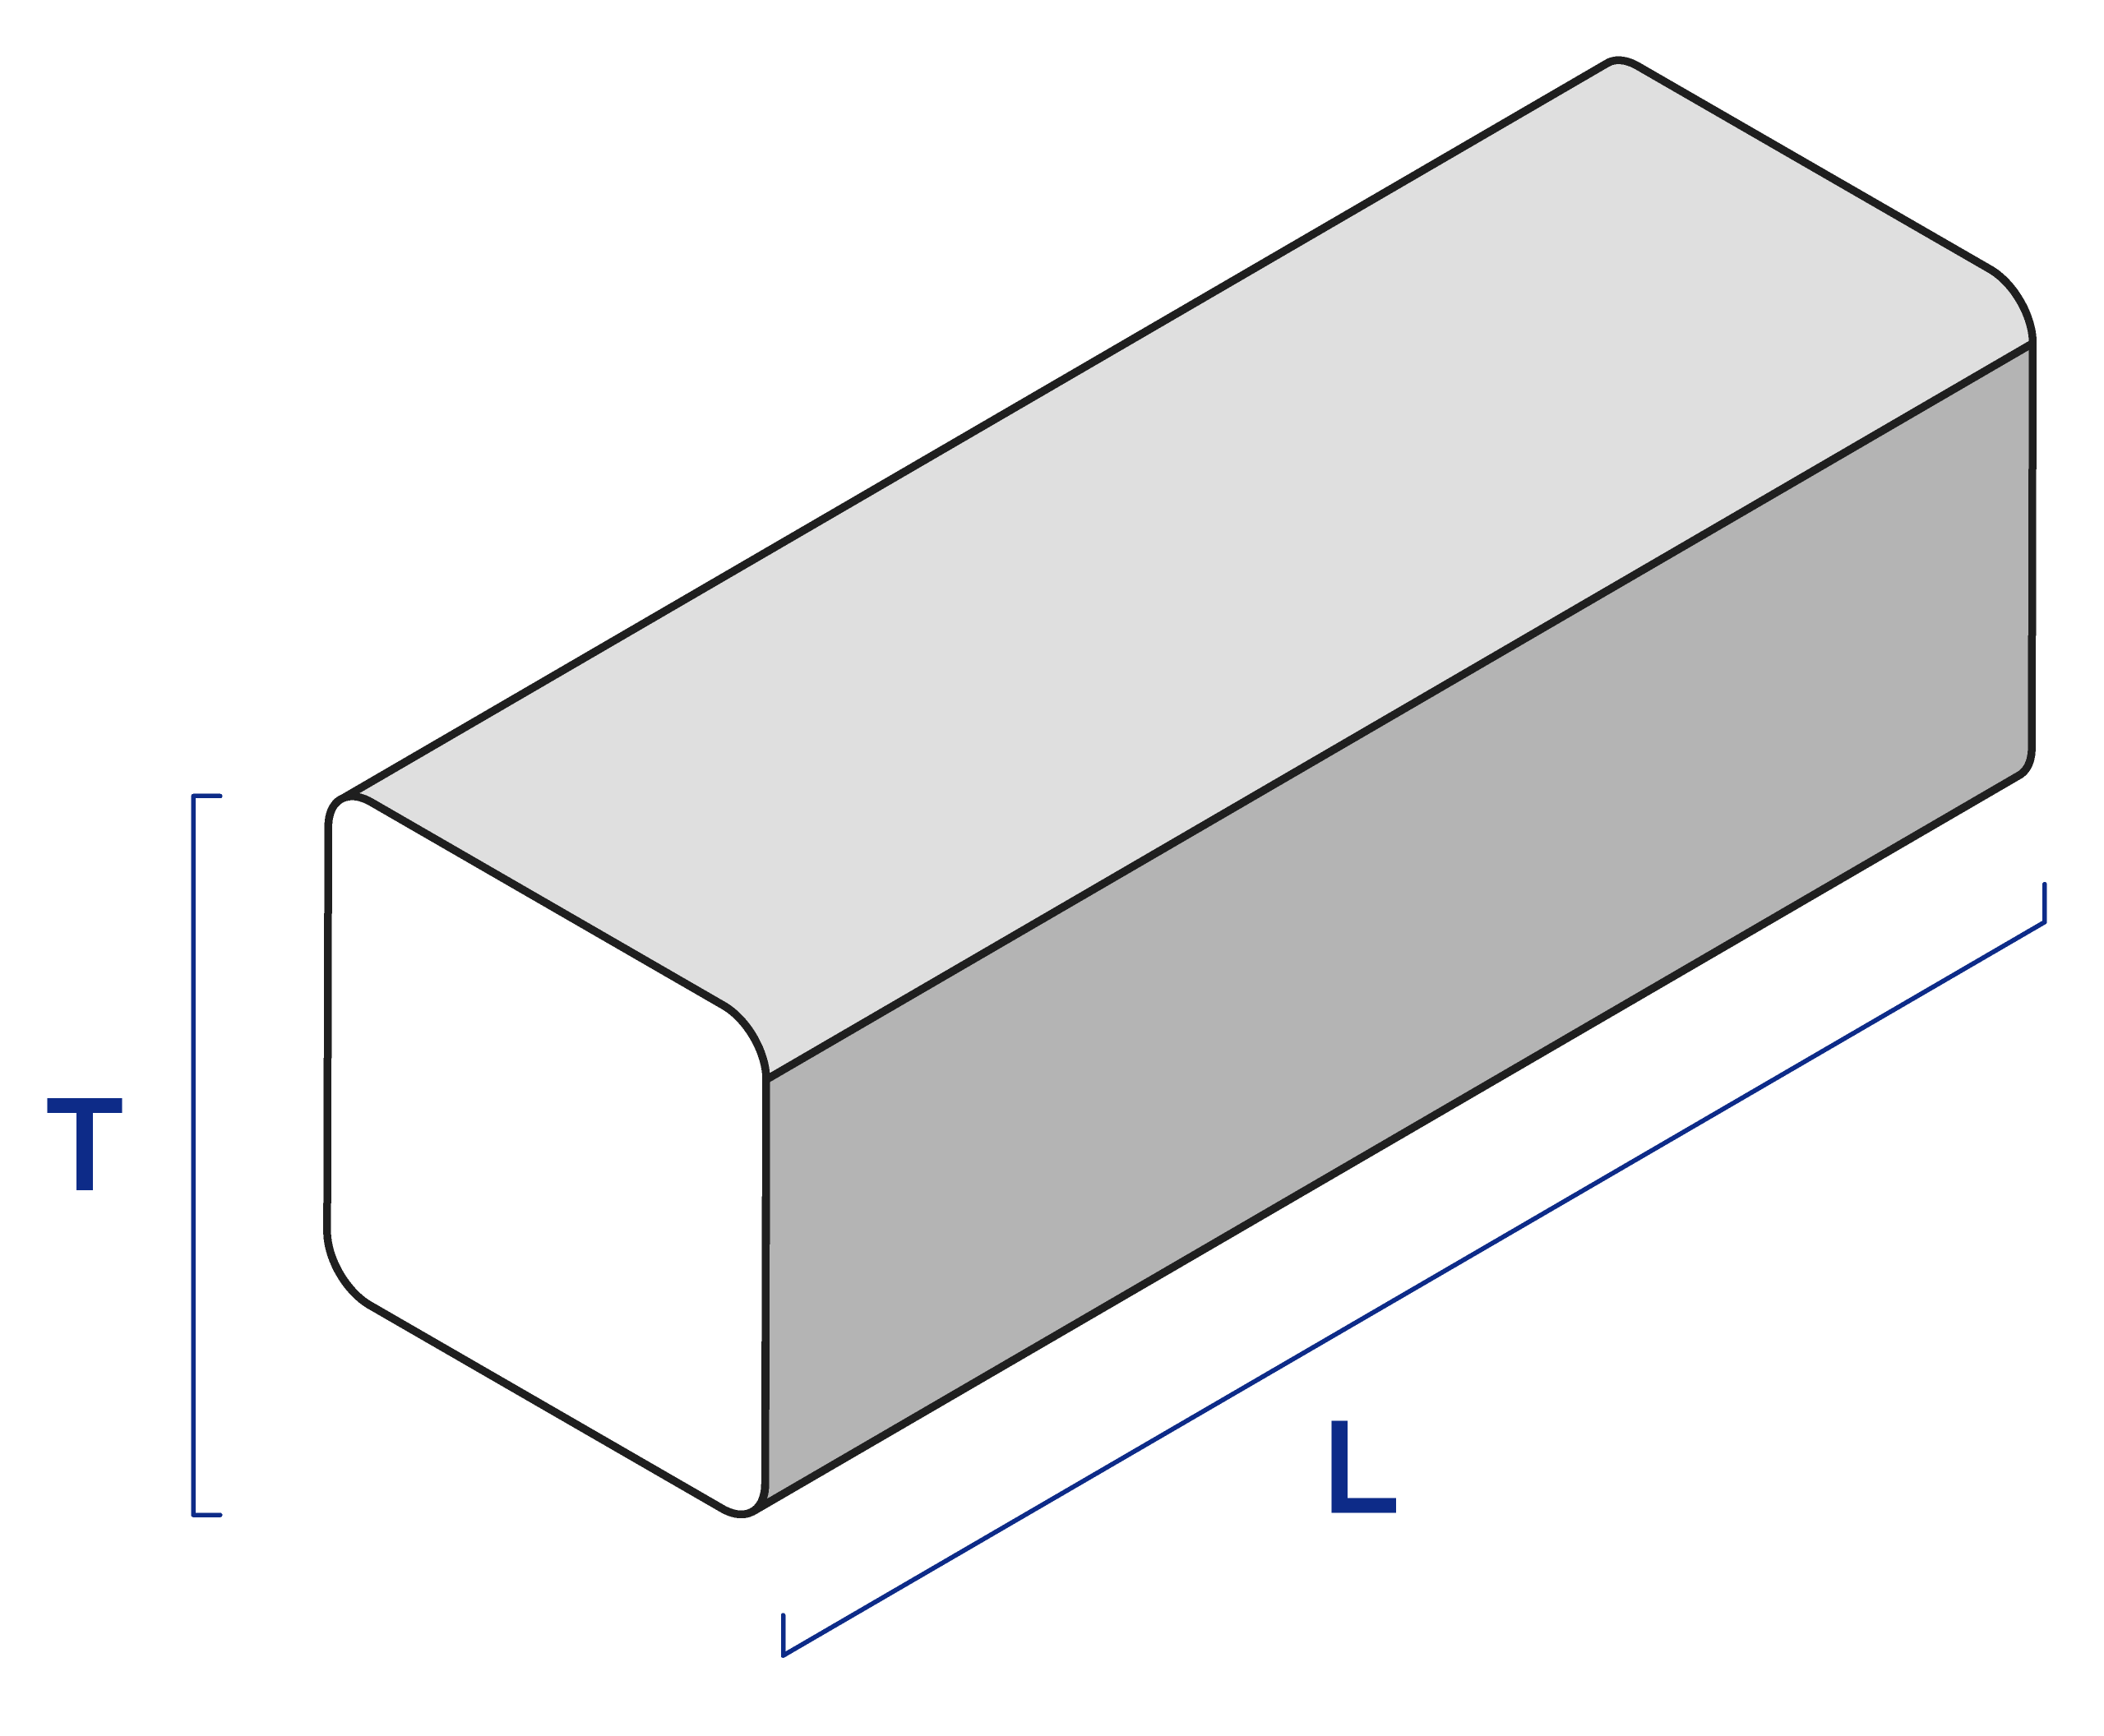 Diagram to measure a square bar